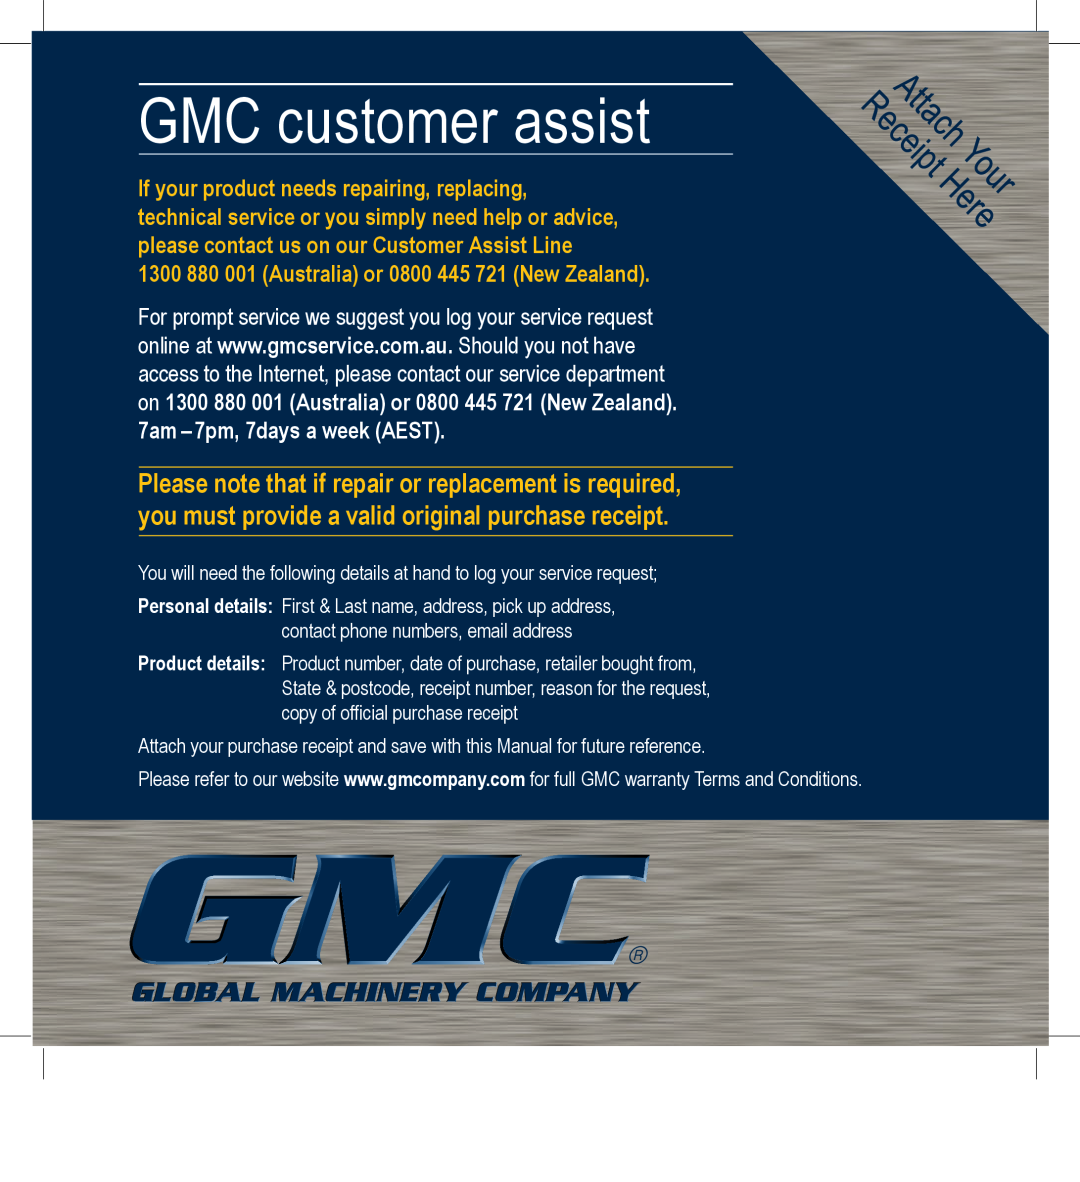 Global Machinery Company SPJ2HM instruction manual GMC customer assist, 1300 880 001 Australia or 0800 445 721 New Zealand 